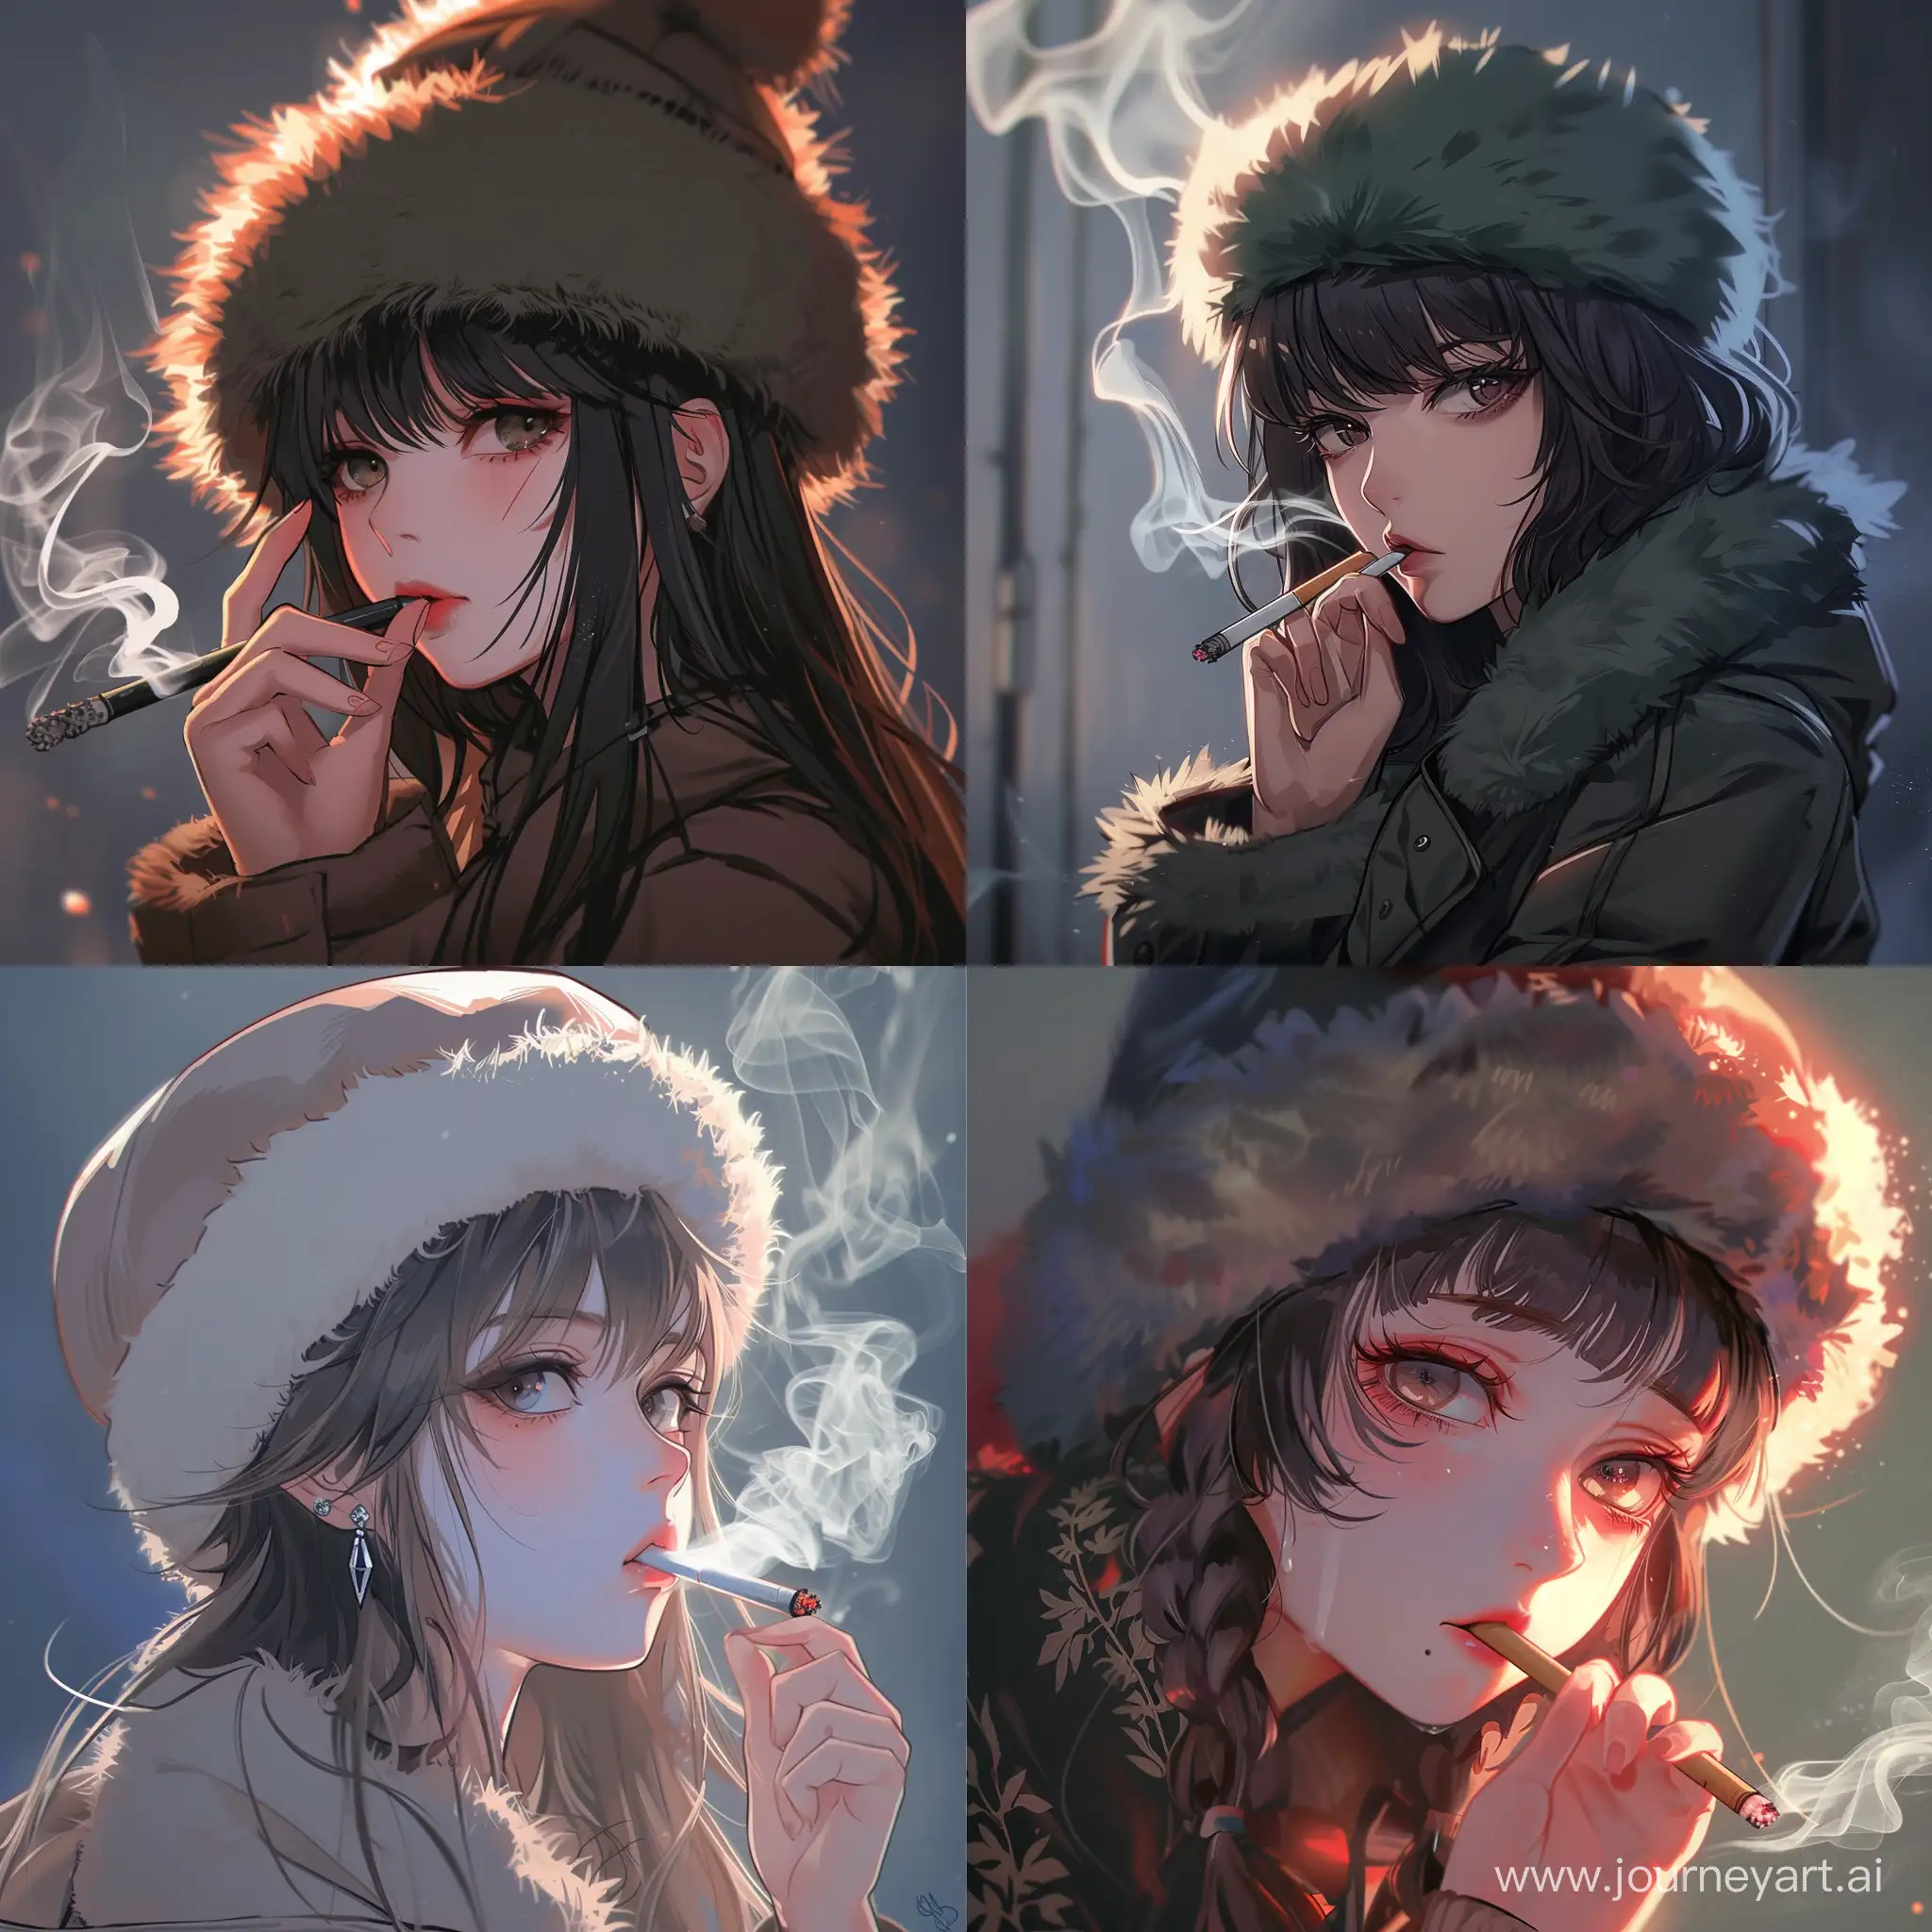 Anime-Style-Girl-in-Ushanka-Hat-Smoking